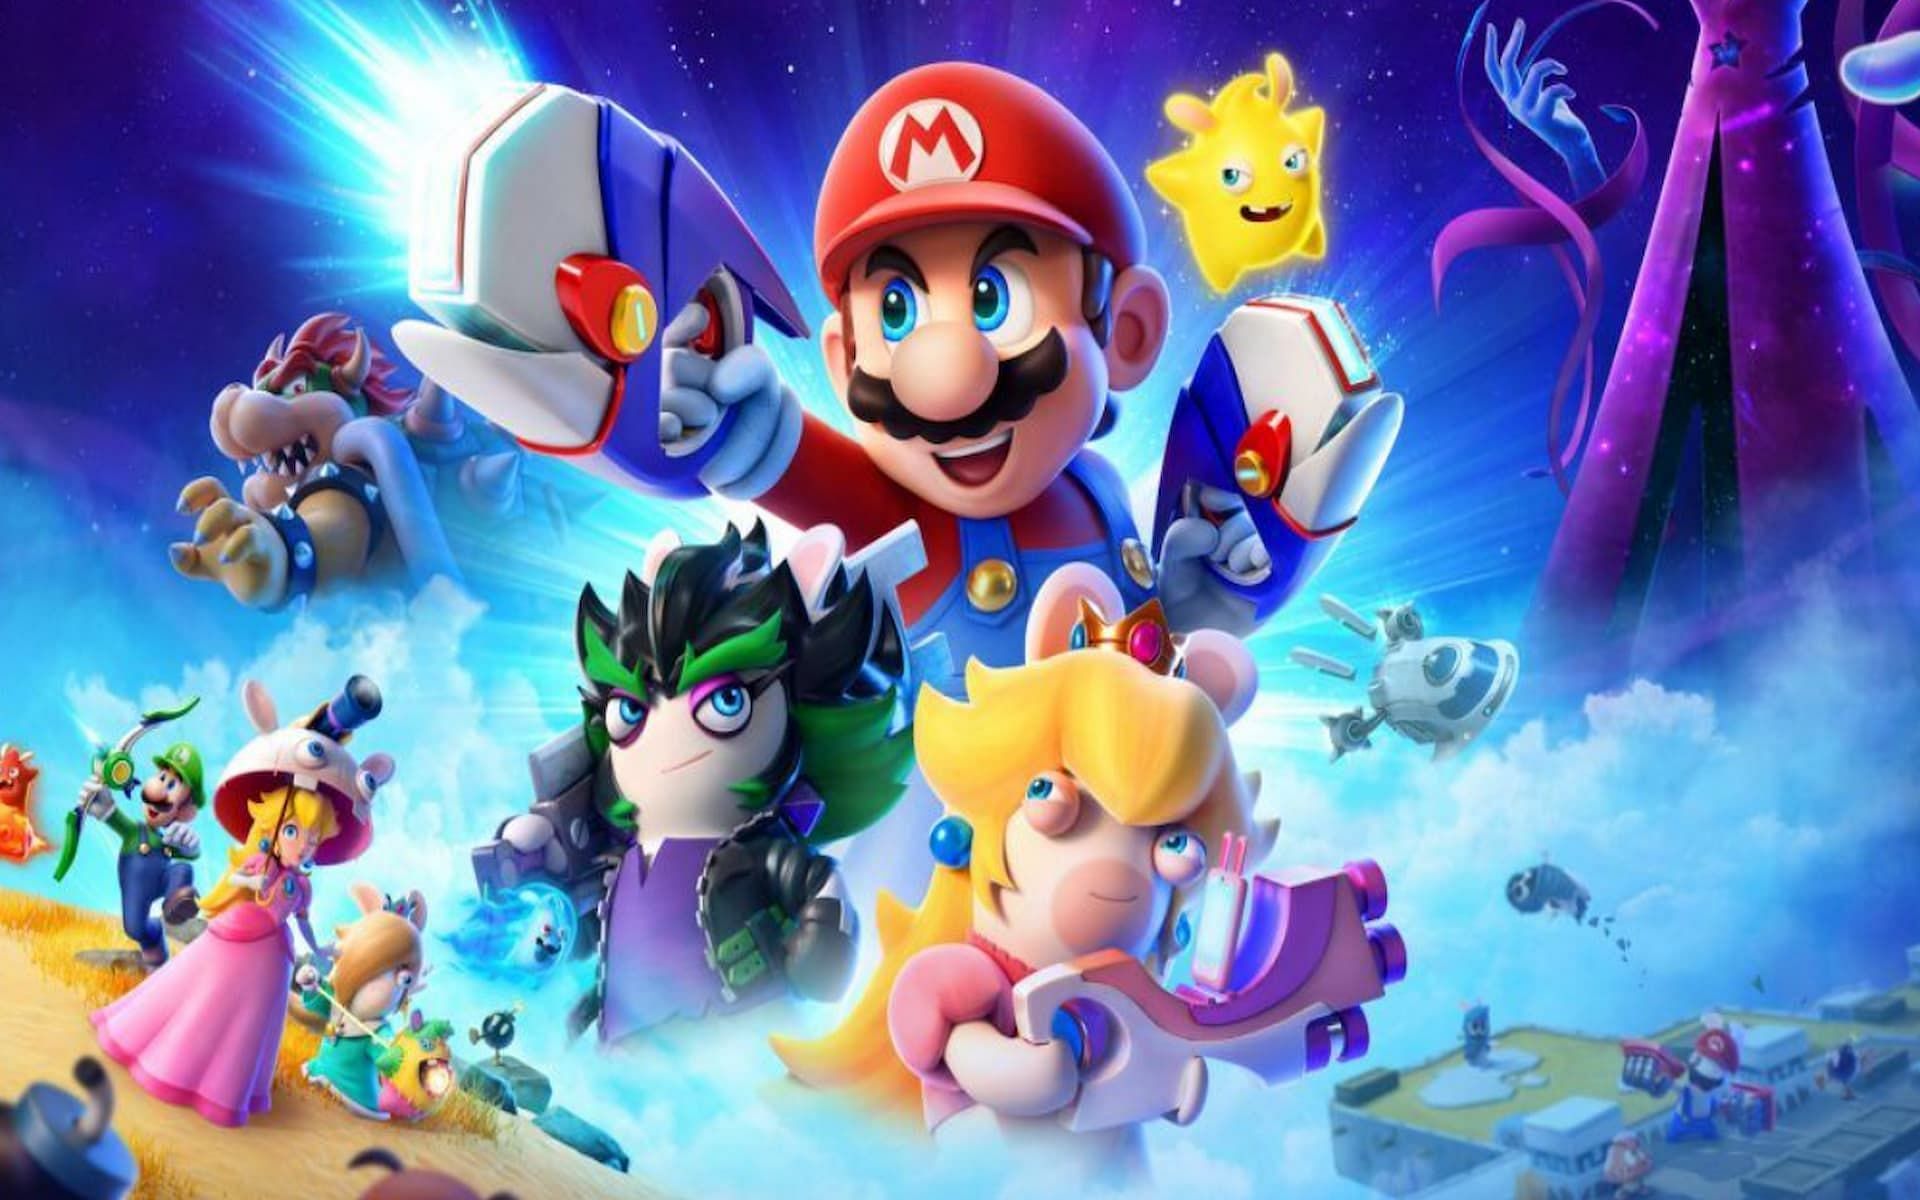 A promotional image for Mario + Rabbids: Sparks of Hope (Image via Nintendo)